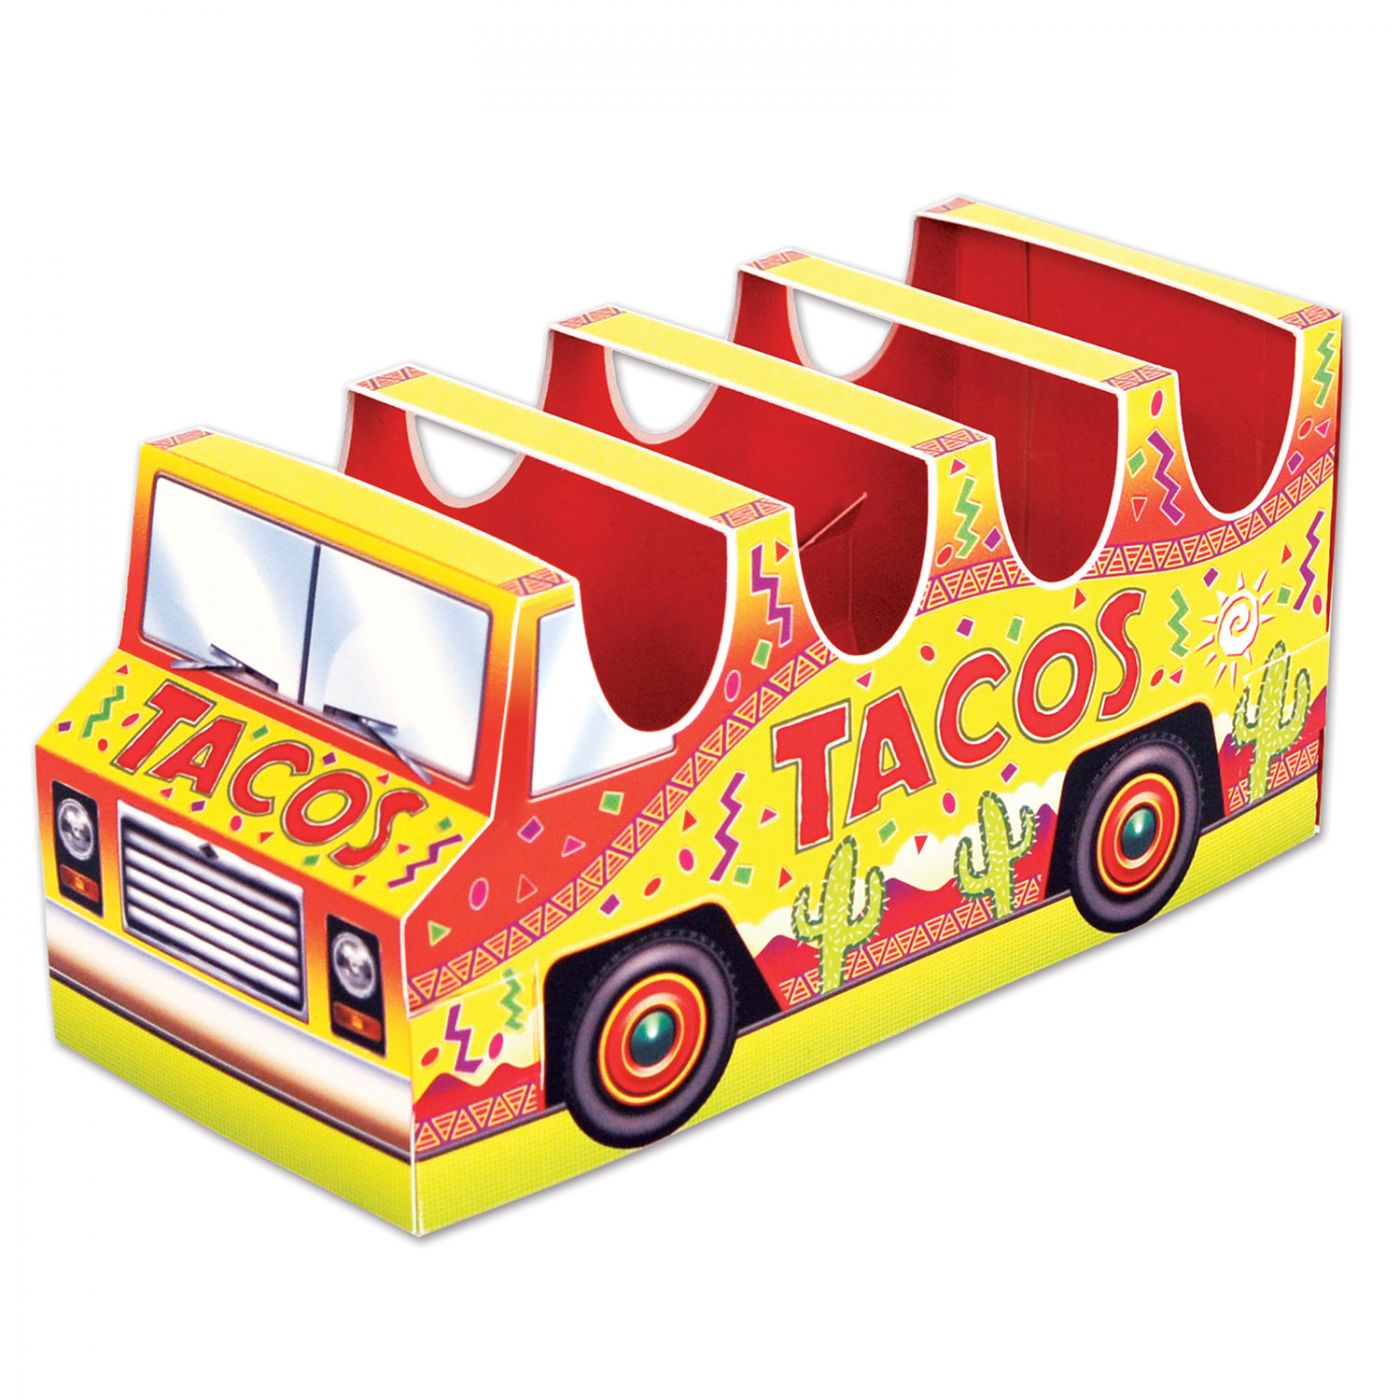 3-D Taco Truck Centerpiece image